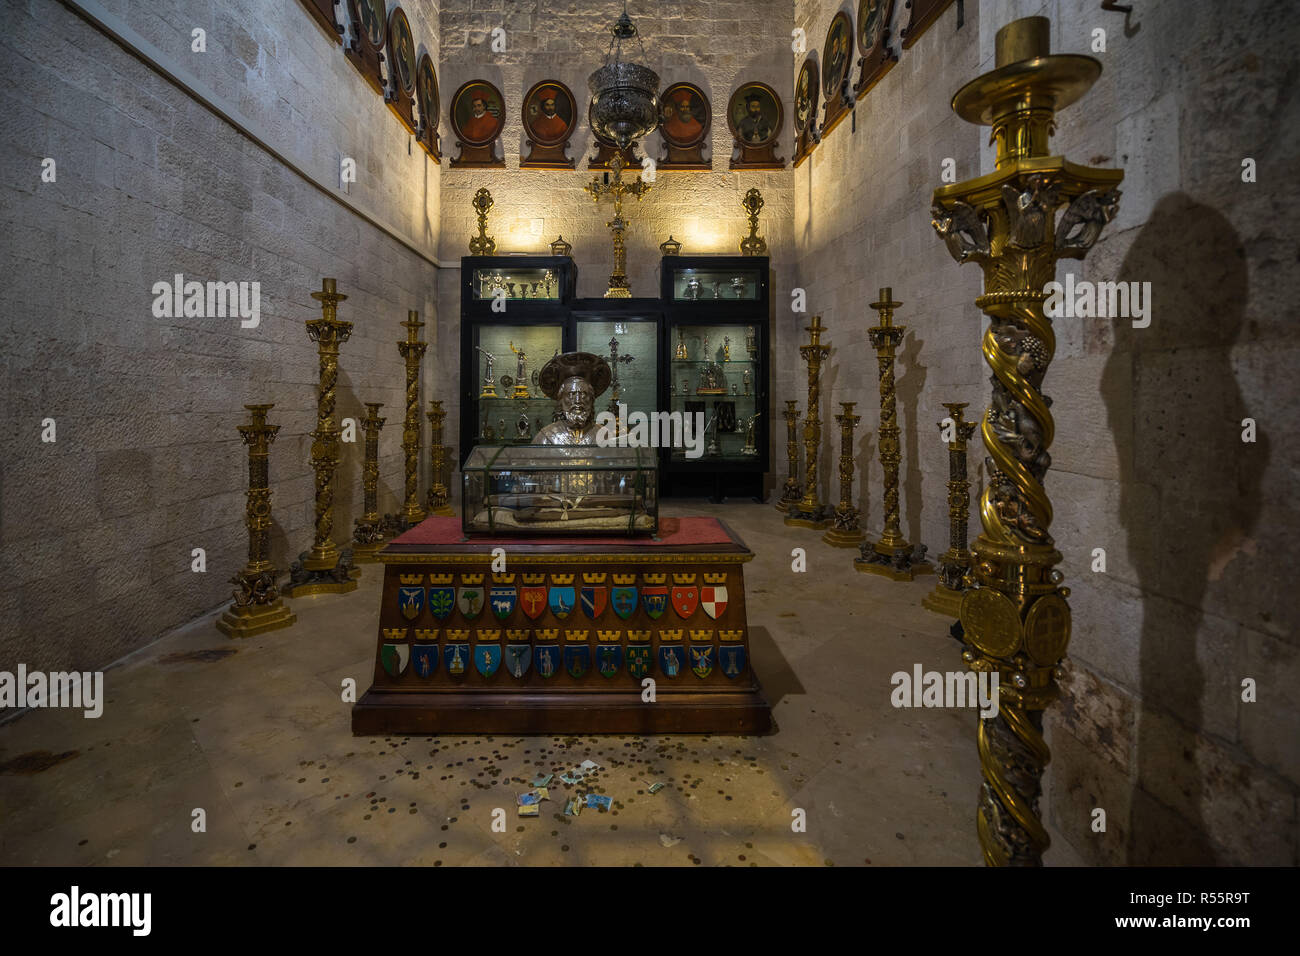 Relics inside Basilica of Saint Nicholas, Bari, Apulia, Italy Stock Photo